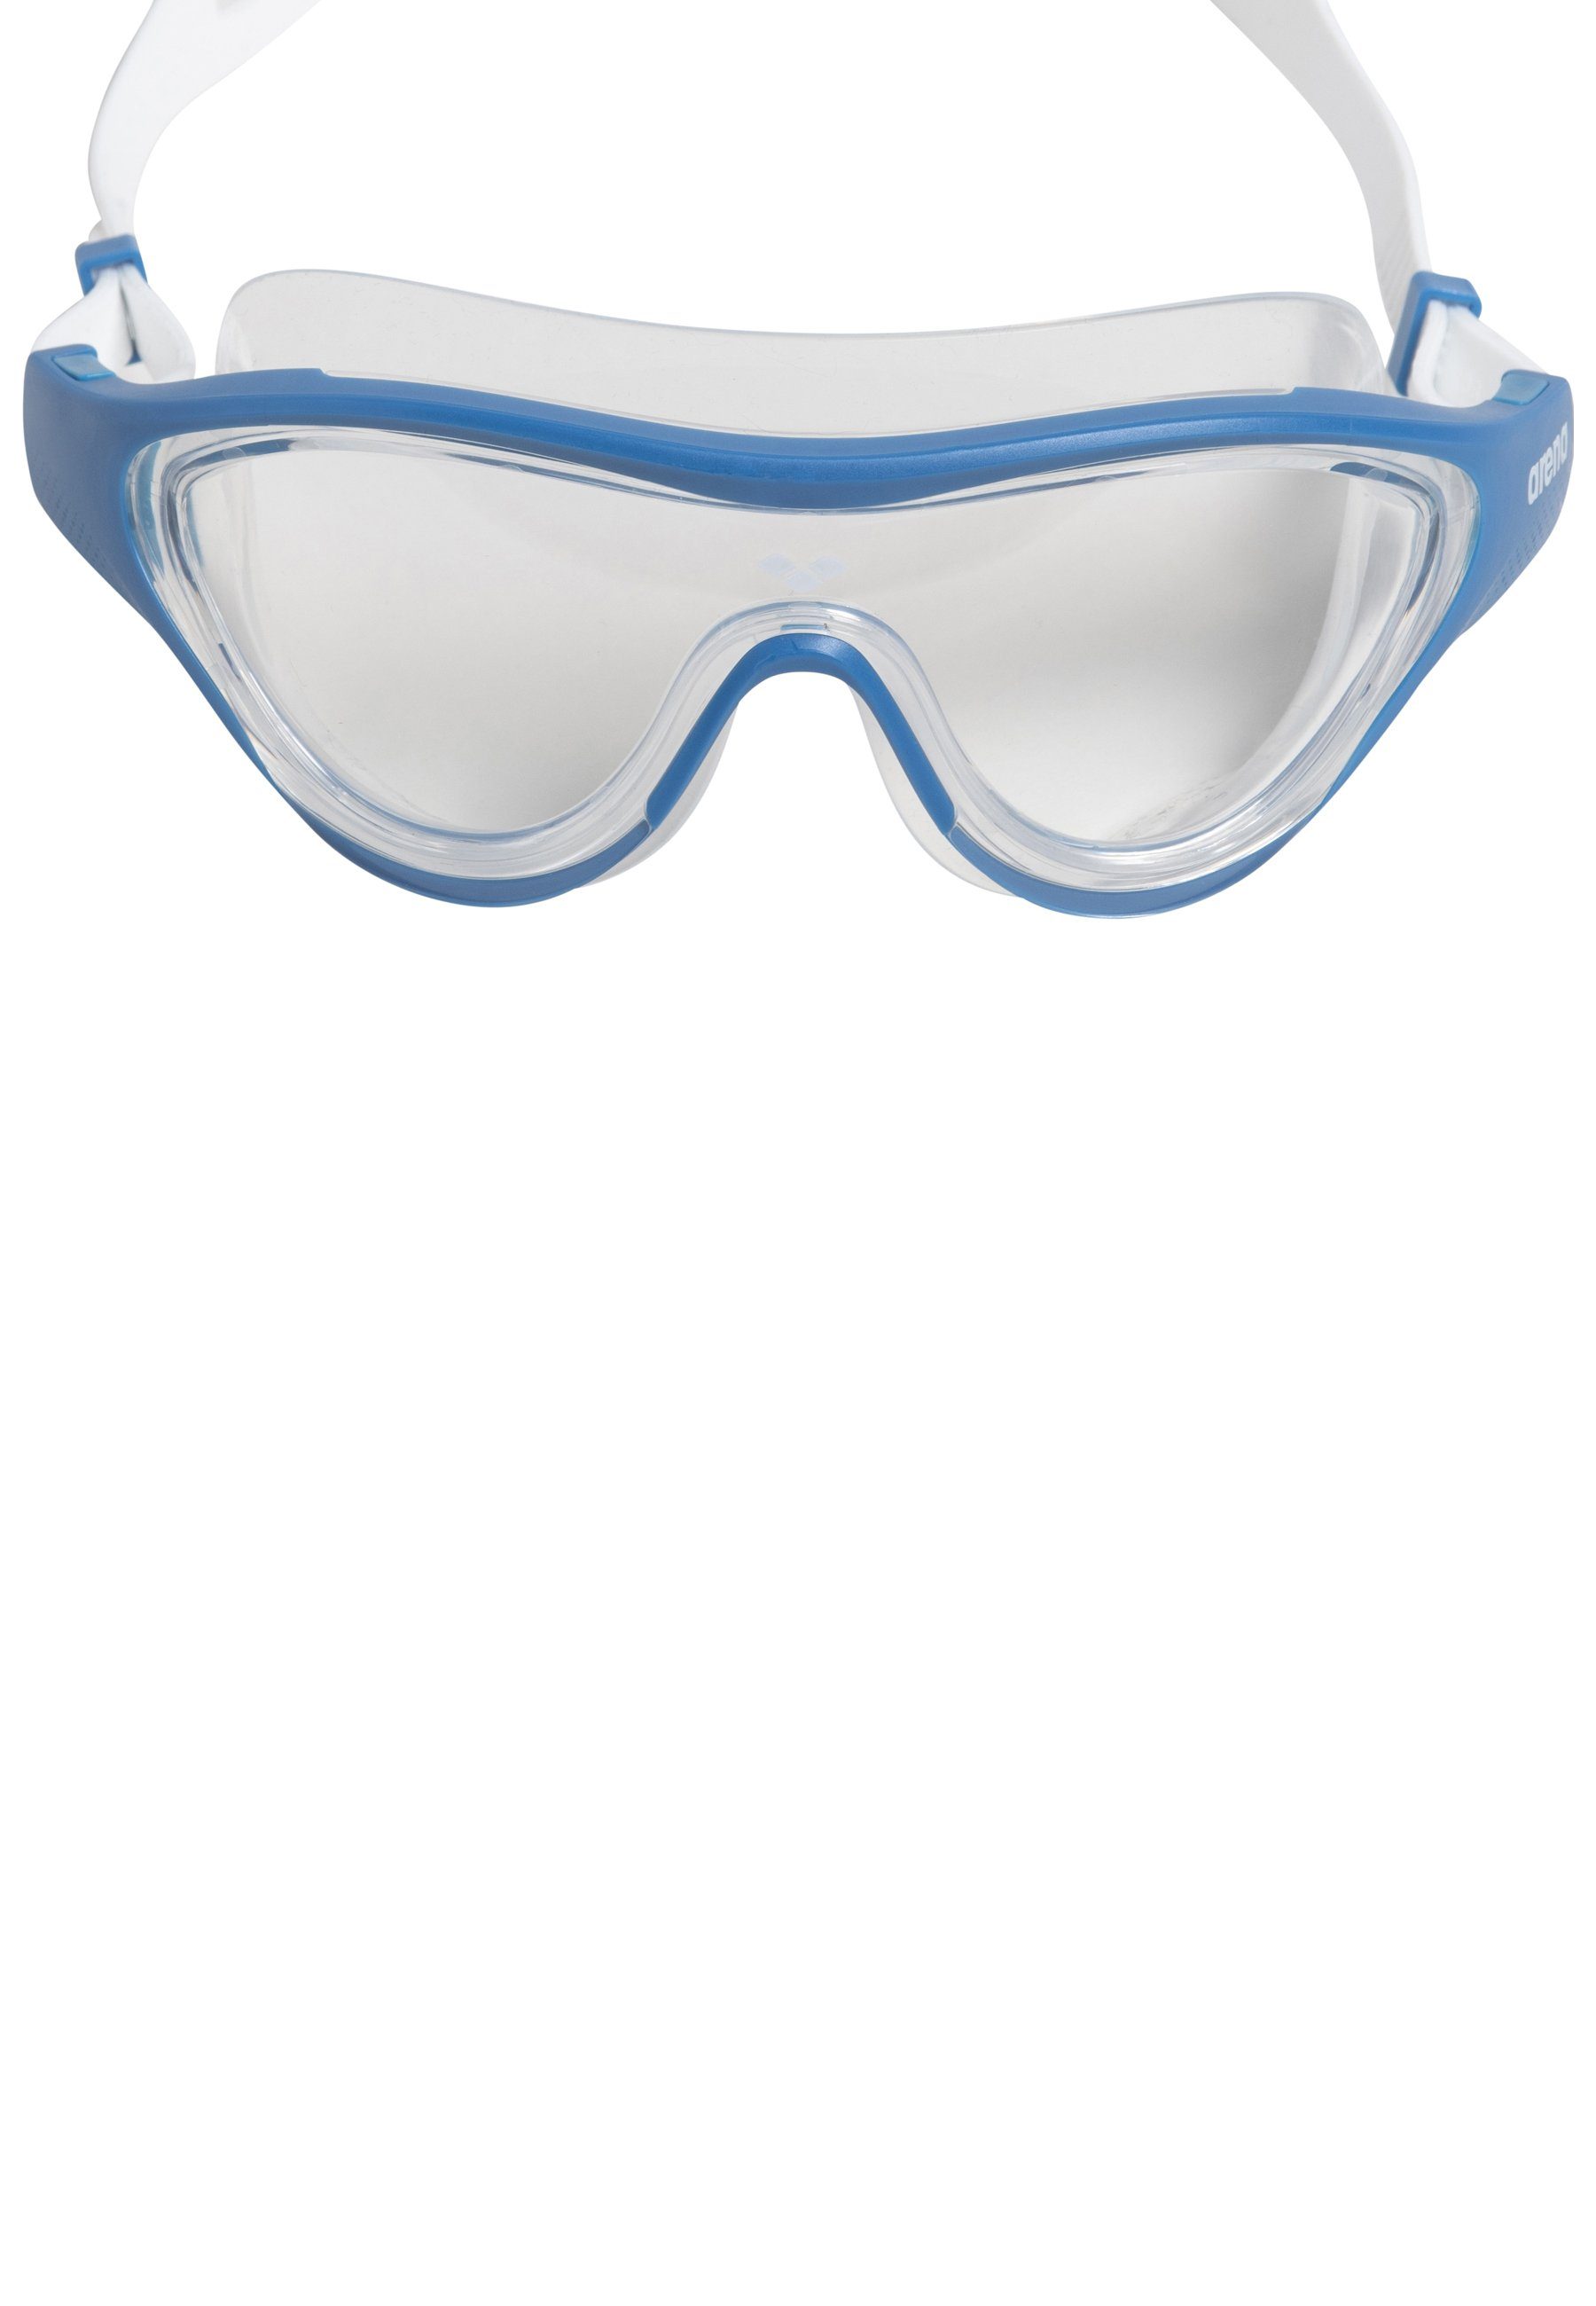 Arena Sportbrille The One Mask clear-blue-white | Brillen